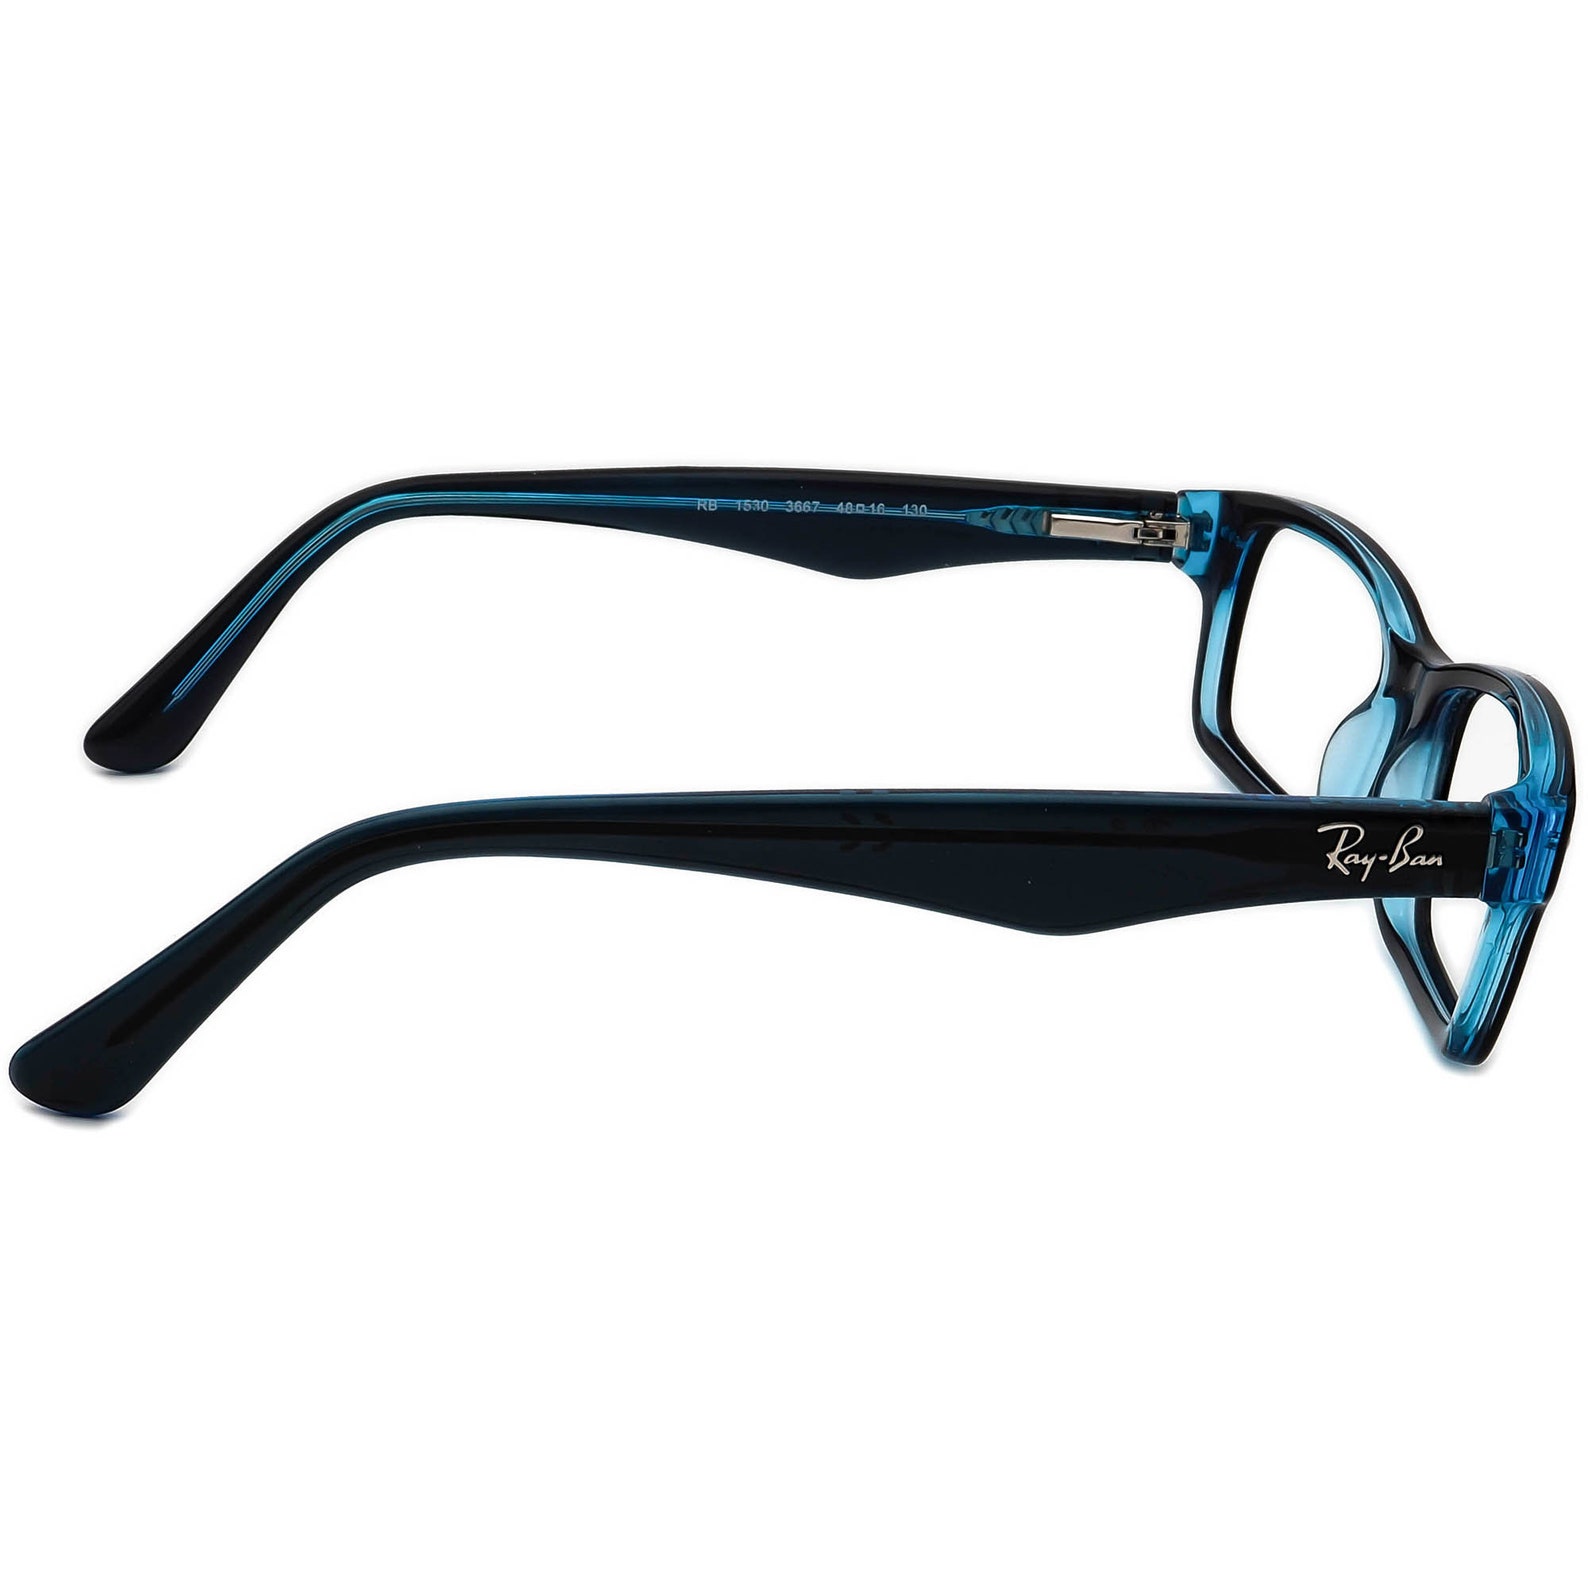 Ray Ban Small Eyeglasses Rb 1530 3667 Blue Rectangular Frame Etsy